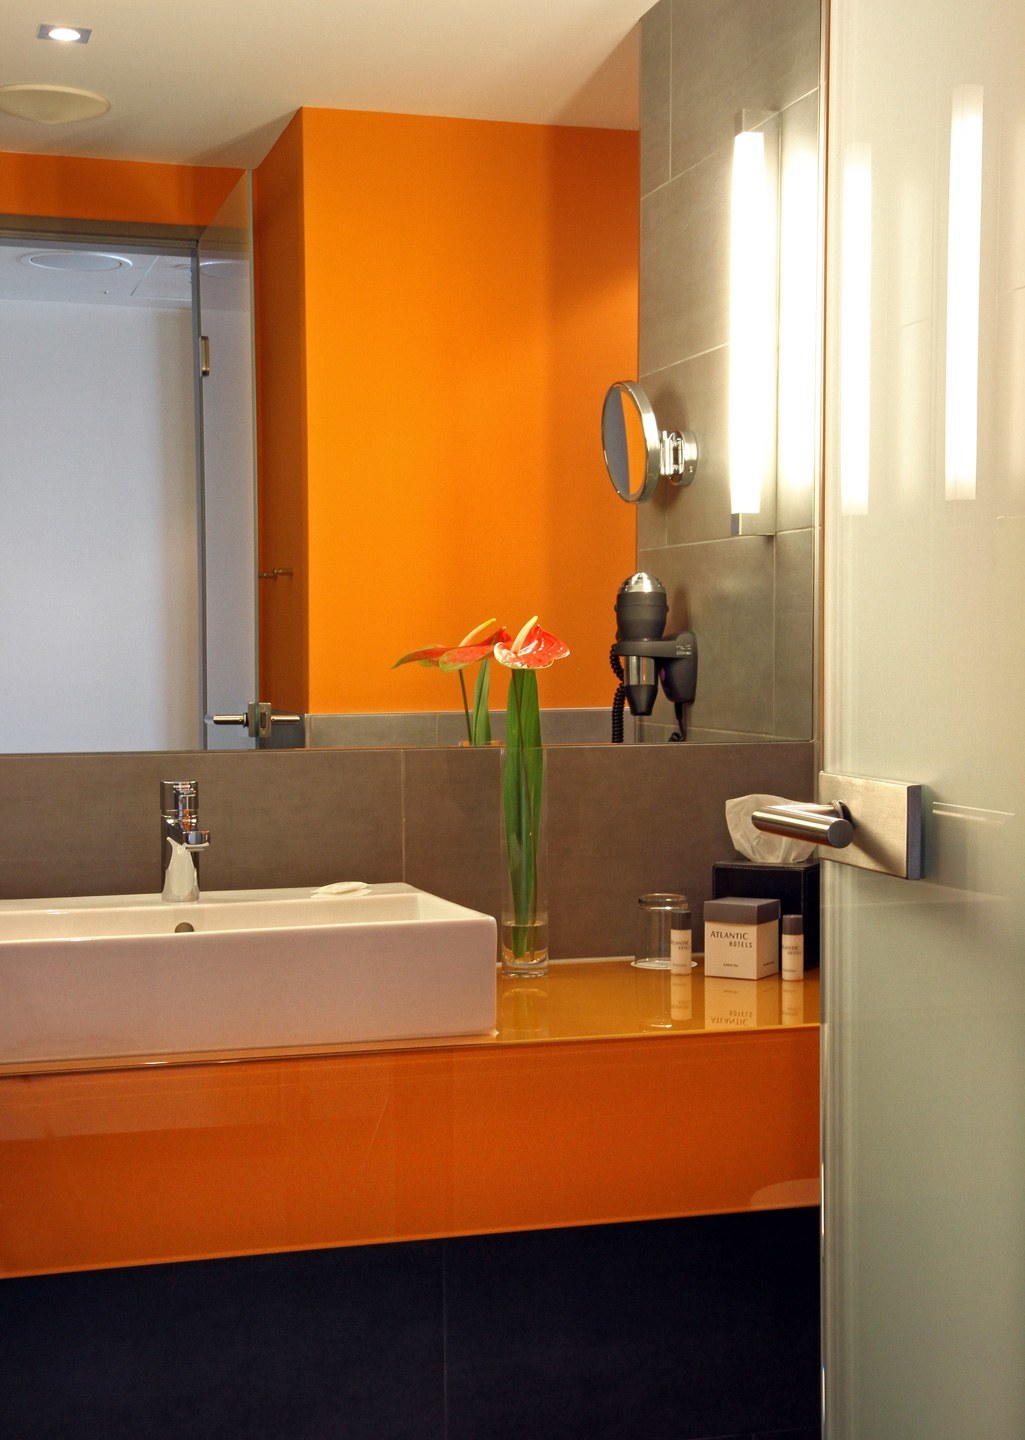 Bathroom of the Deluxe room in ATLANTIC Hotel Kiel